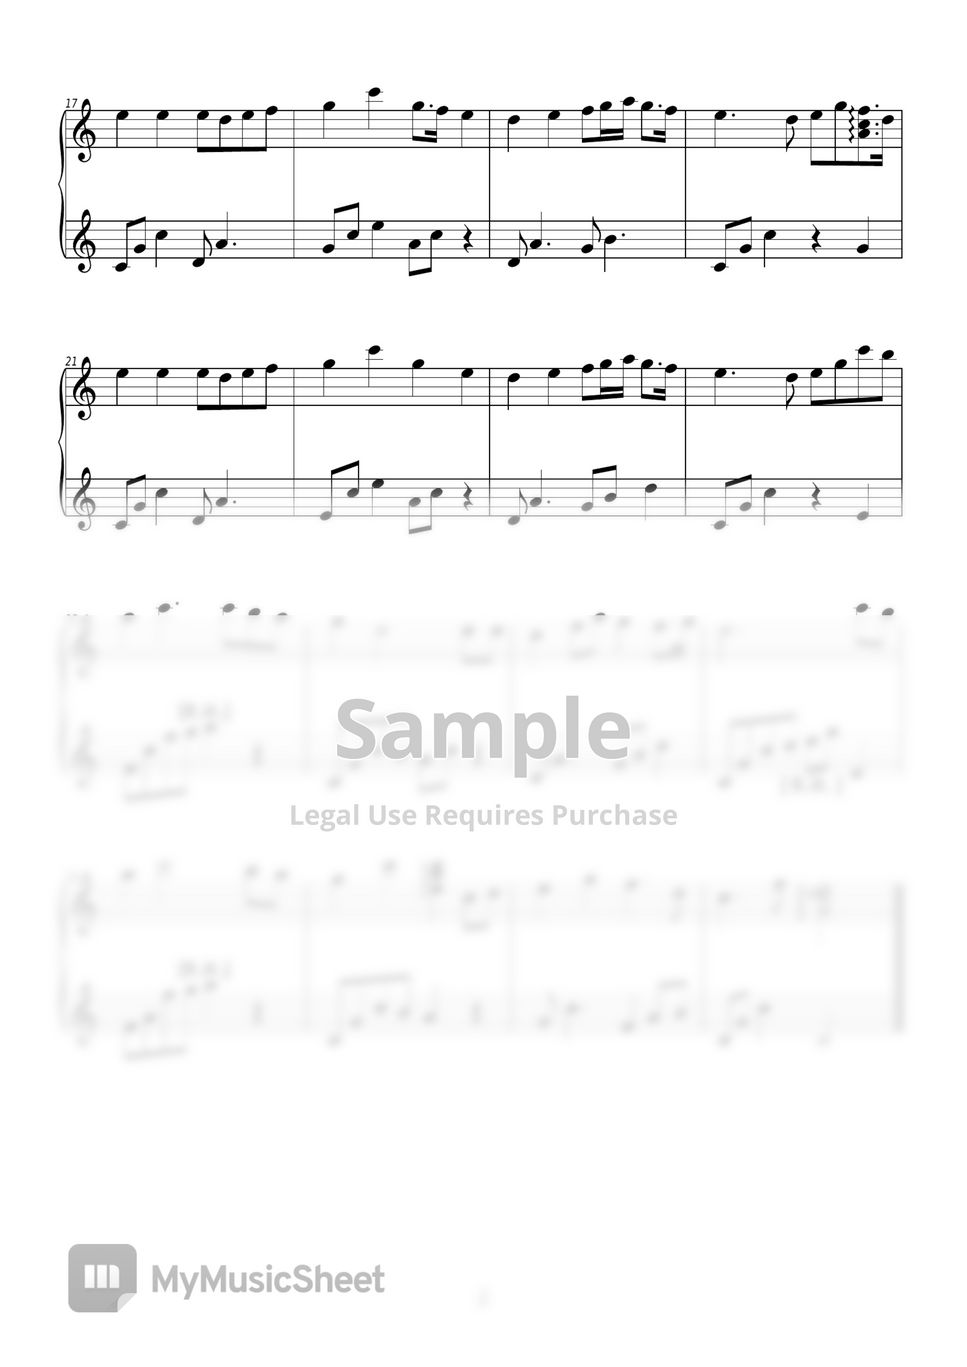 D.A. Turupp - Saviour, Like a Shepherd Lead Us (miniharp music) by hyangpist